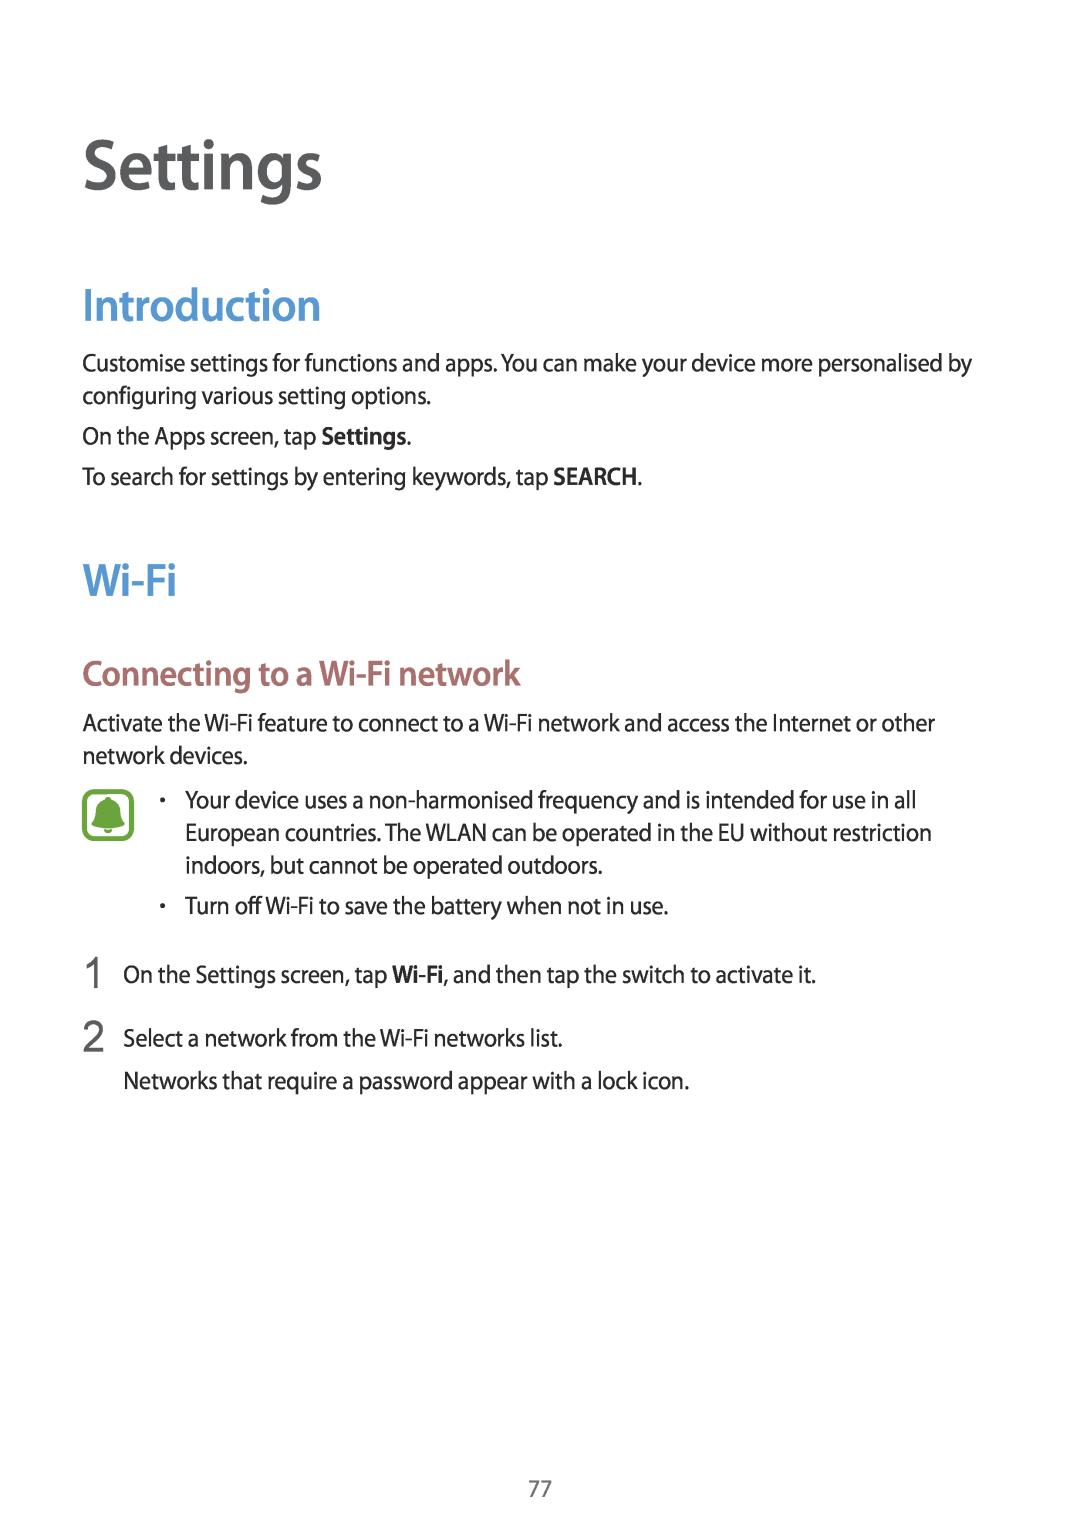 Samsung SM-T819NZKEXEZ, SM-T819NZKEDBT, SM-T719NZKEDBT manual Settings, Introduction, Connecting to a Wi-Fi network 